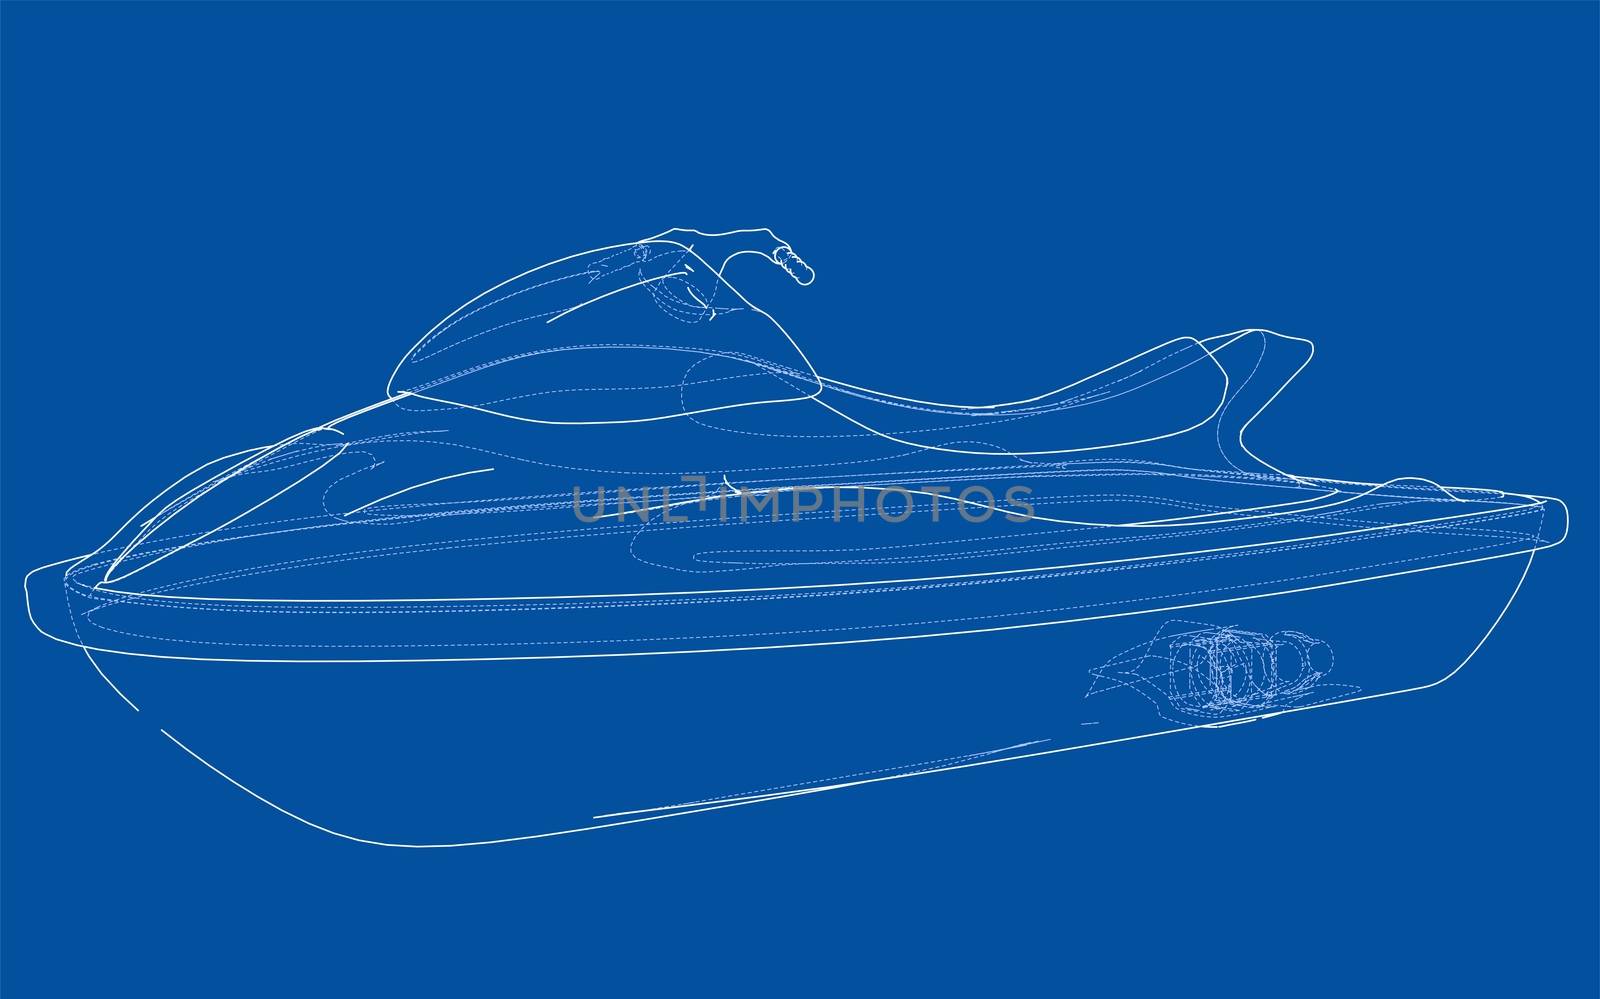 Jet ski sketch. 3d illustration. Wire-frame style